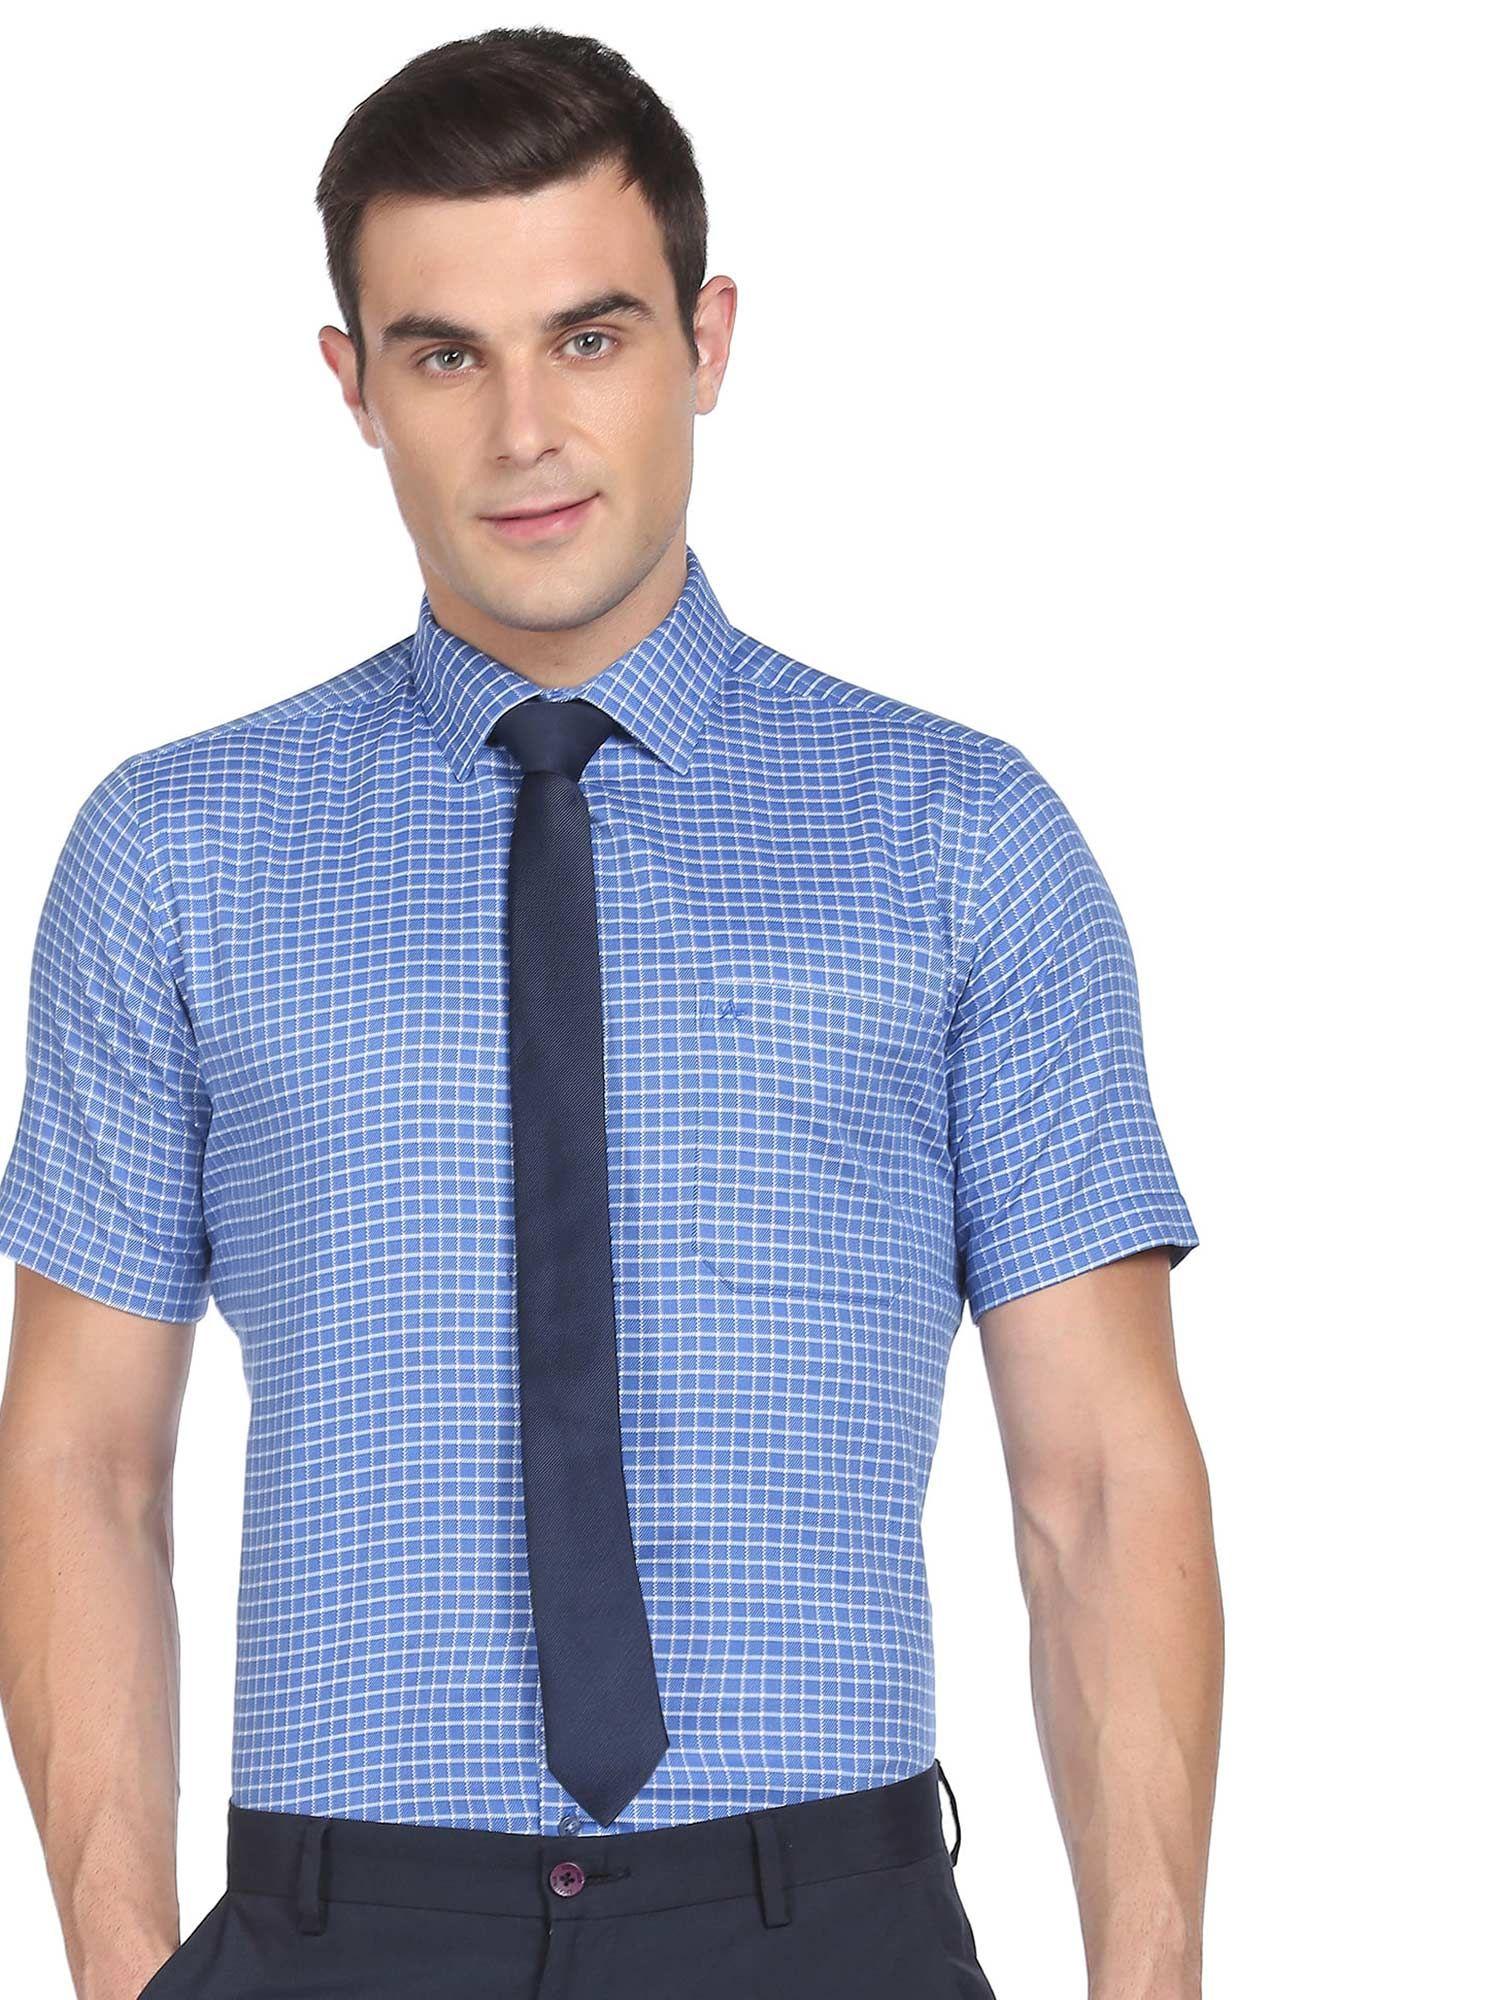 men-blue-short-sleeve-check-formal-shirt